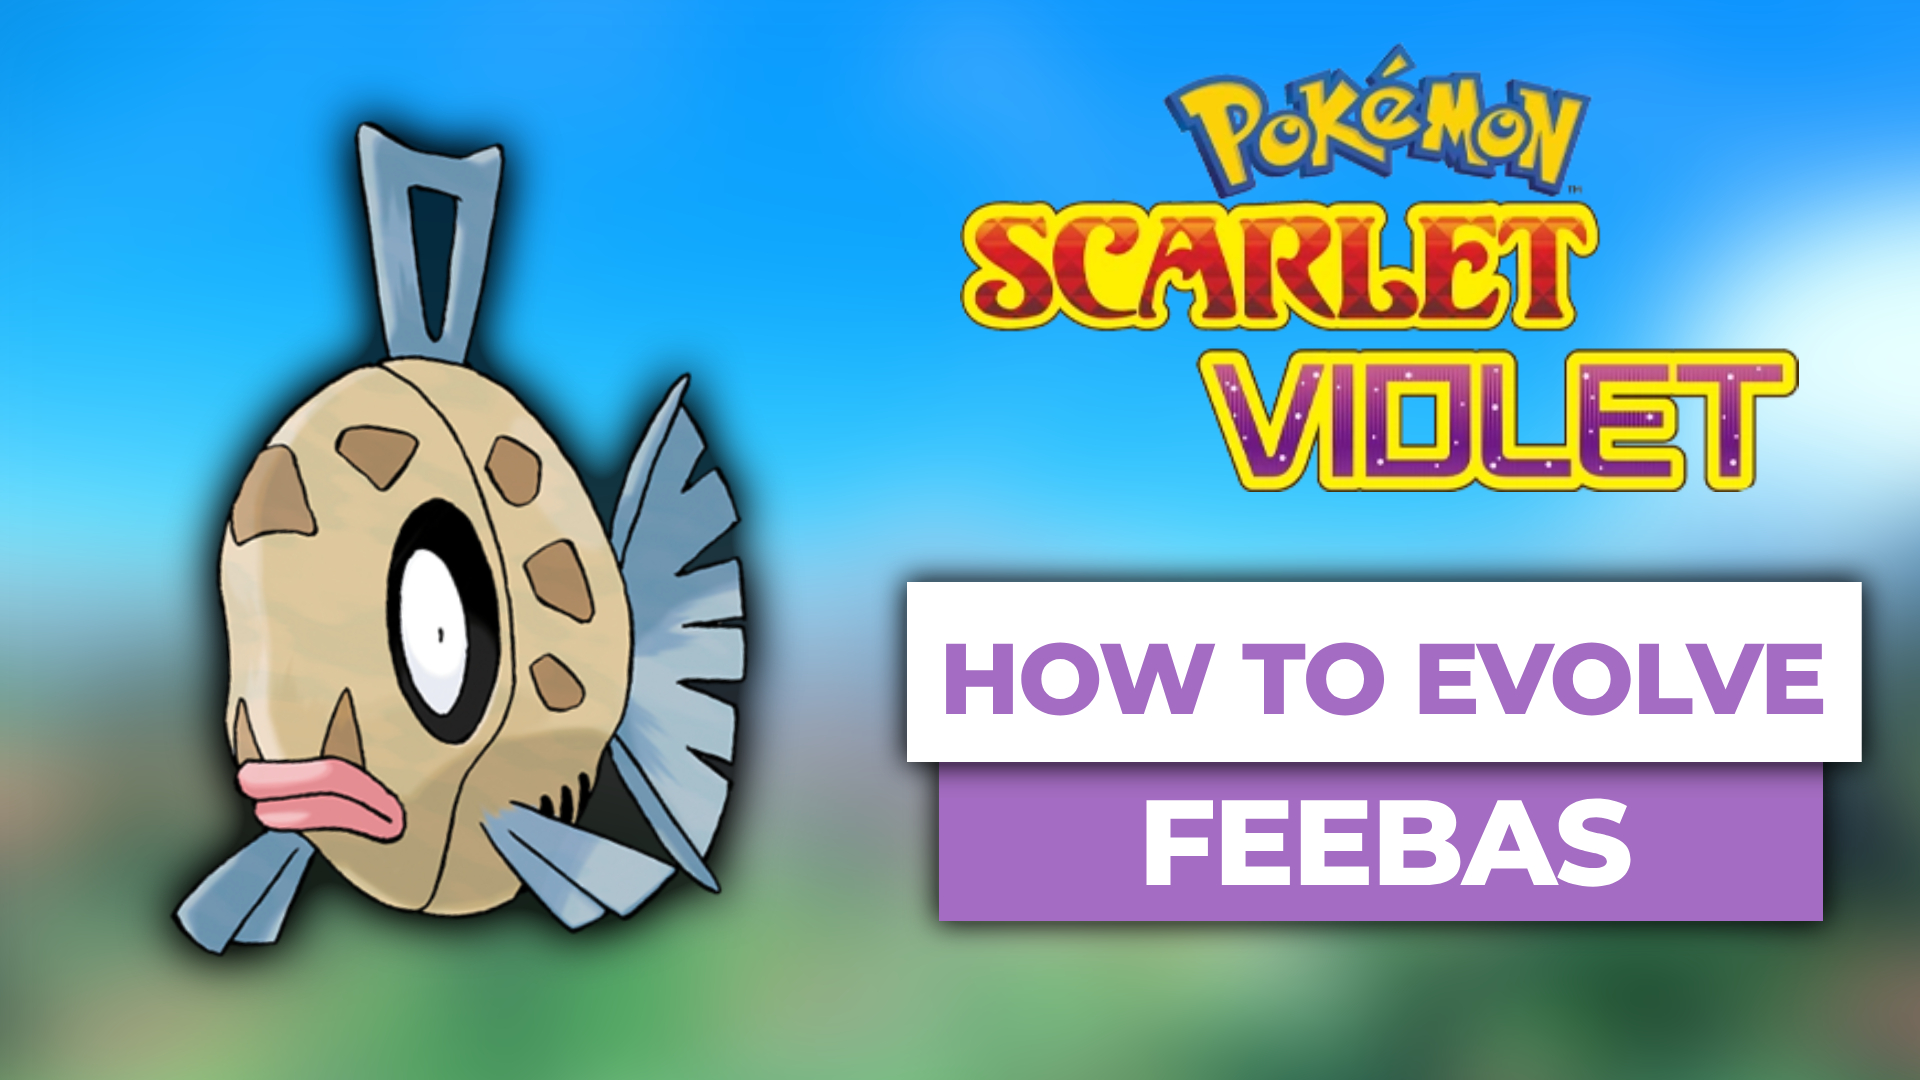 how to evolve feebas pokemon scarlet violet the teal mask